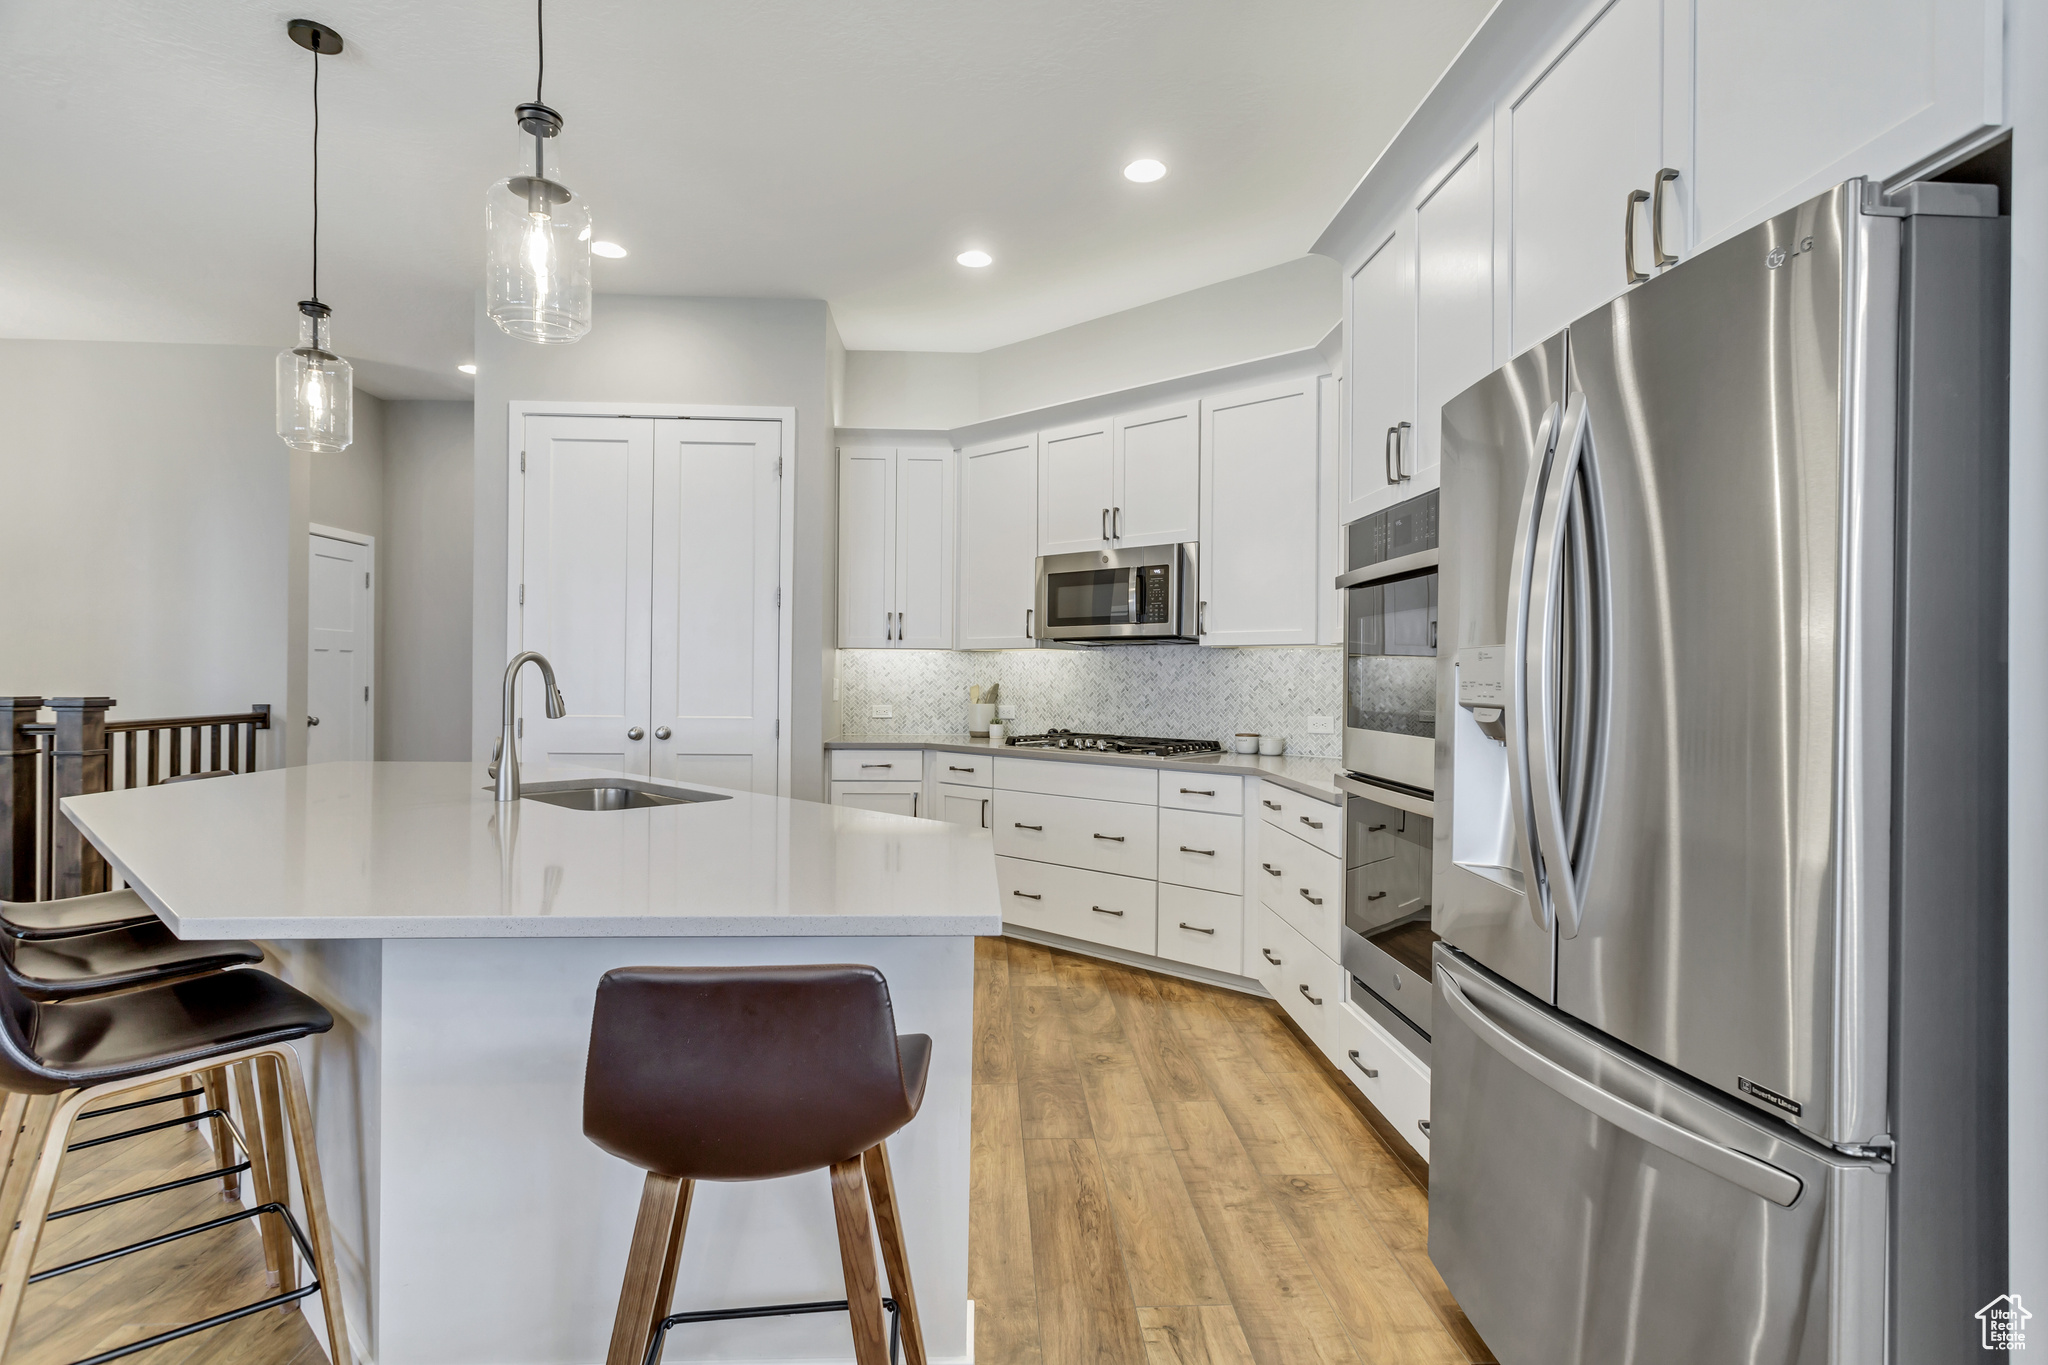 Kitchen featuring pendant lighting, a breakfast bar, stainless steel appliances, sink, and light hardwood / wood-style flooring